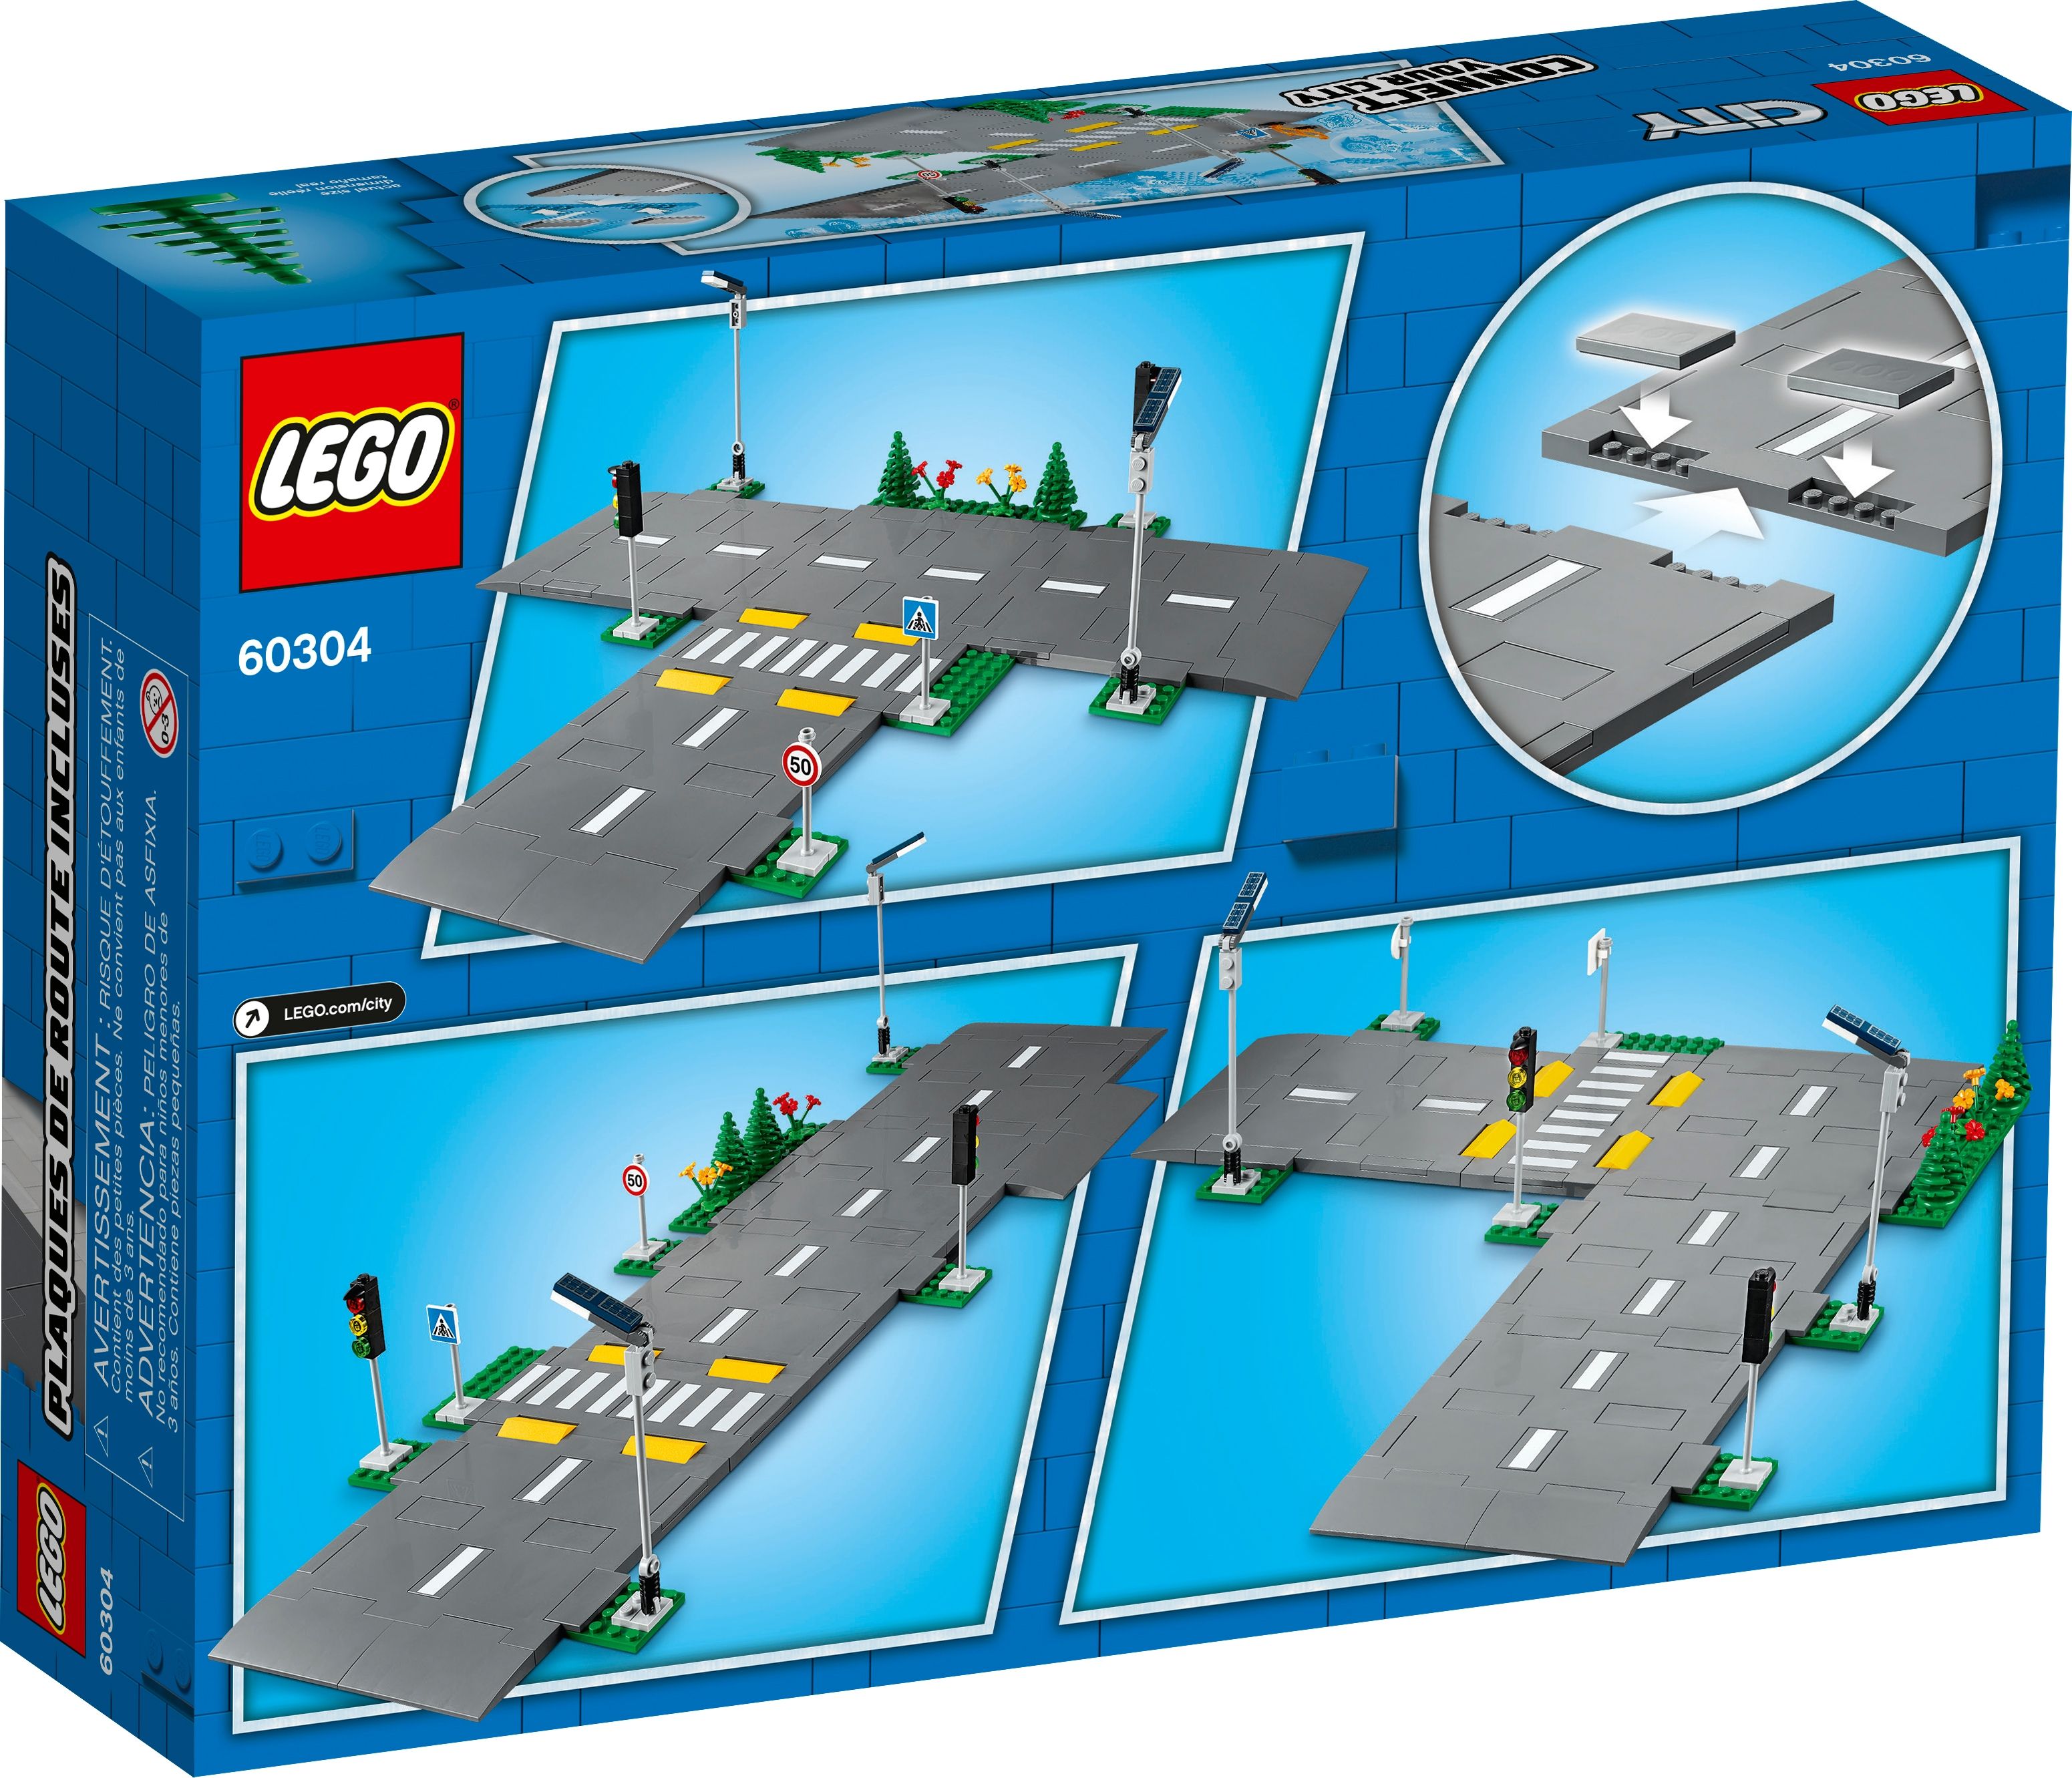 LEGO City 60304 Straßenkreuzung mit Ampeln LEGO_60304_alt8.jpg